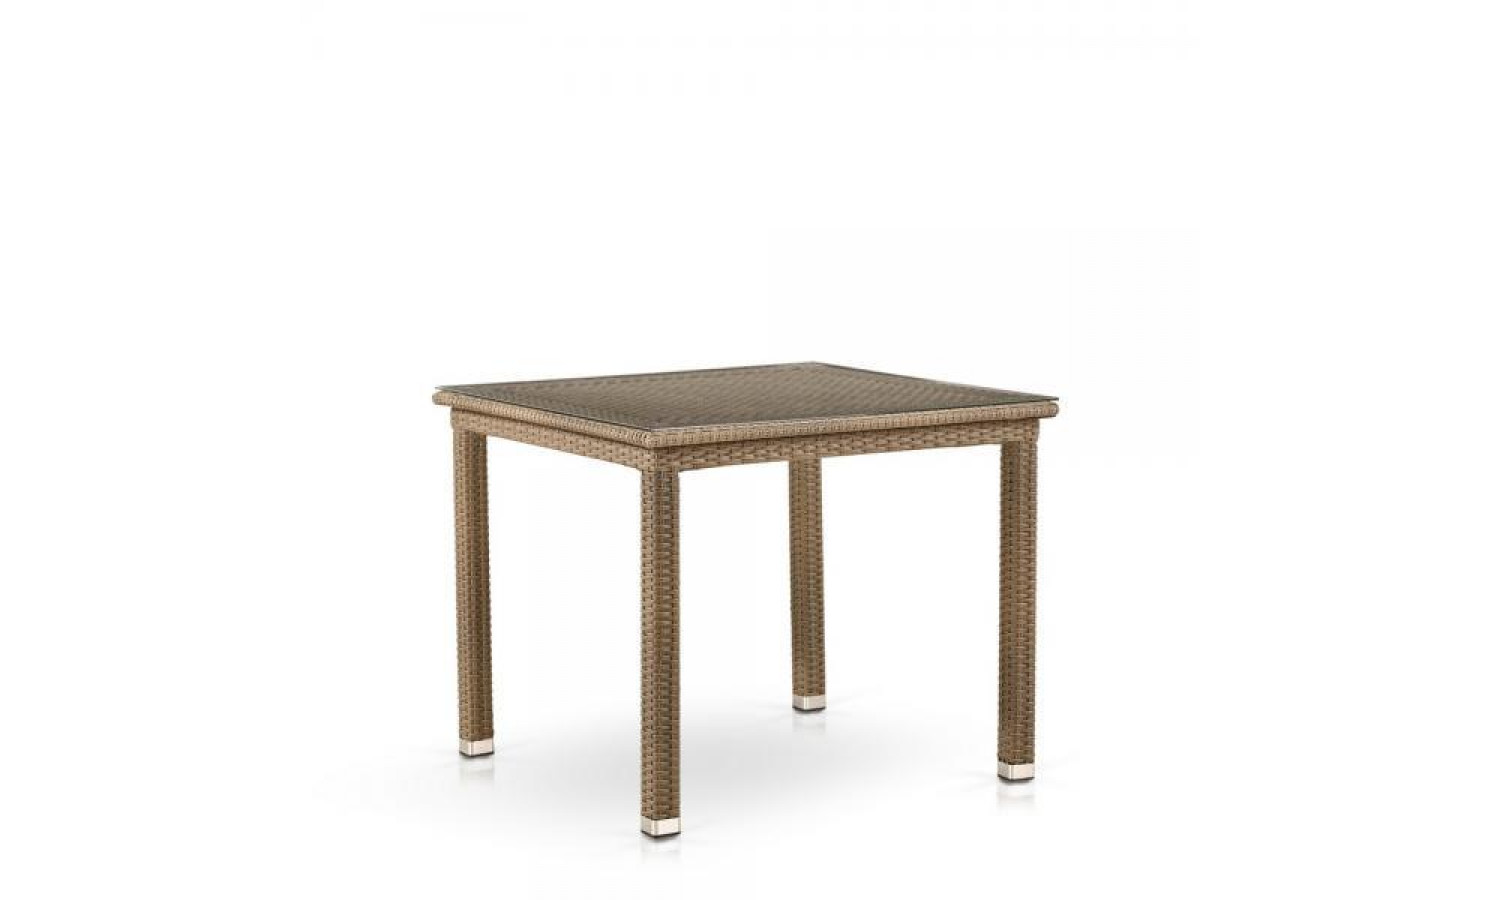 Комплект плетеной мебели T257B/Y379B-W65 Light Brown (4+1)